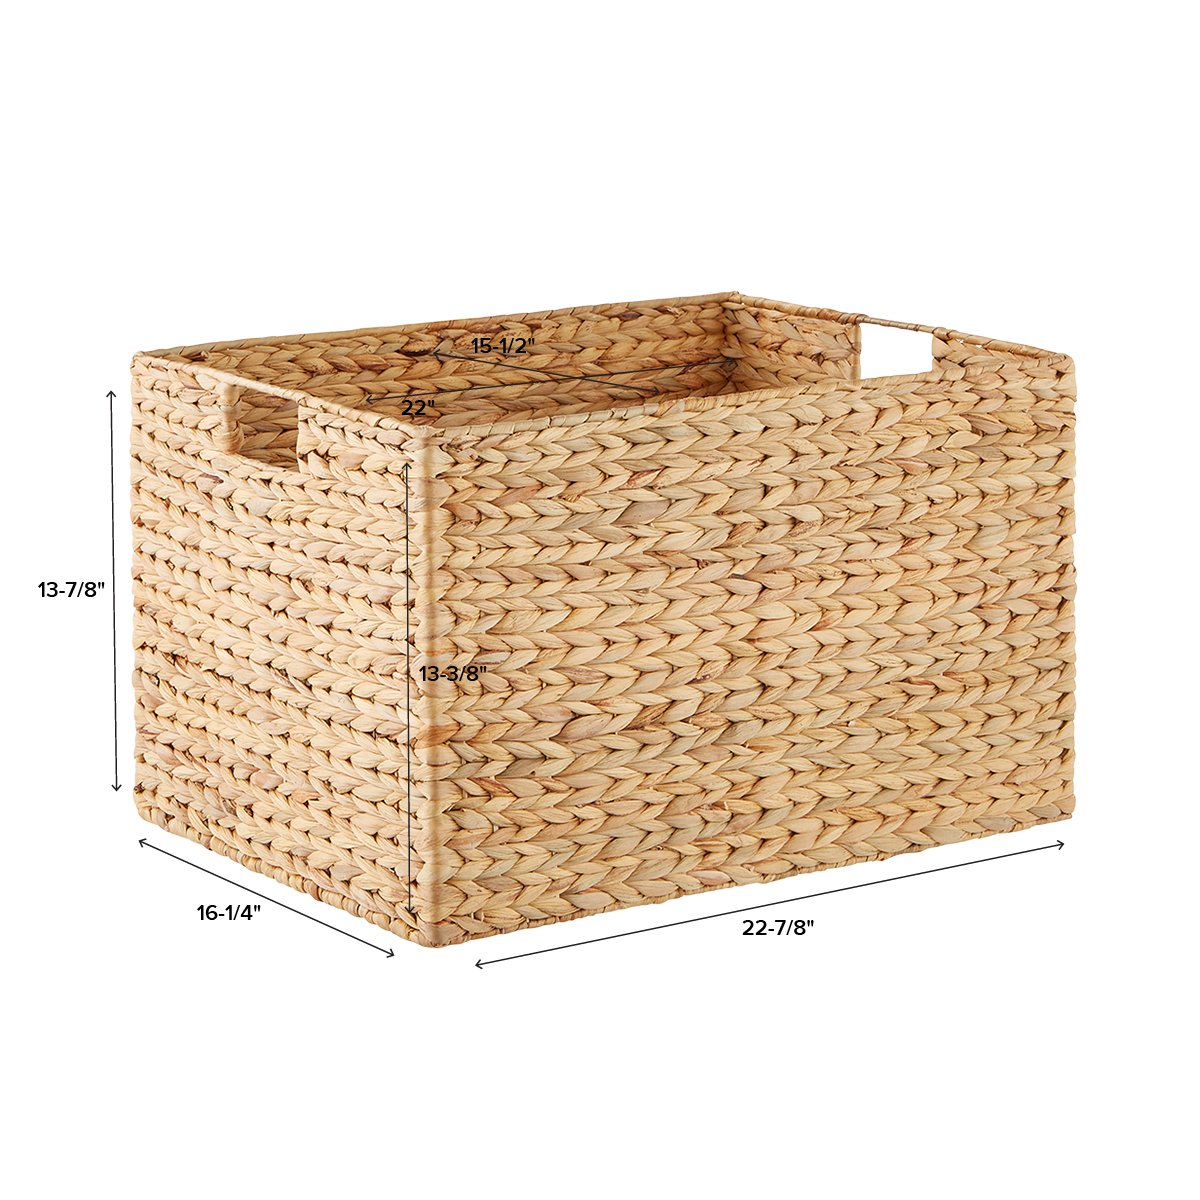 New 2x Rectangle Plastic Storage Basket Wicker Design Home Office Organisation